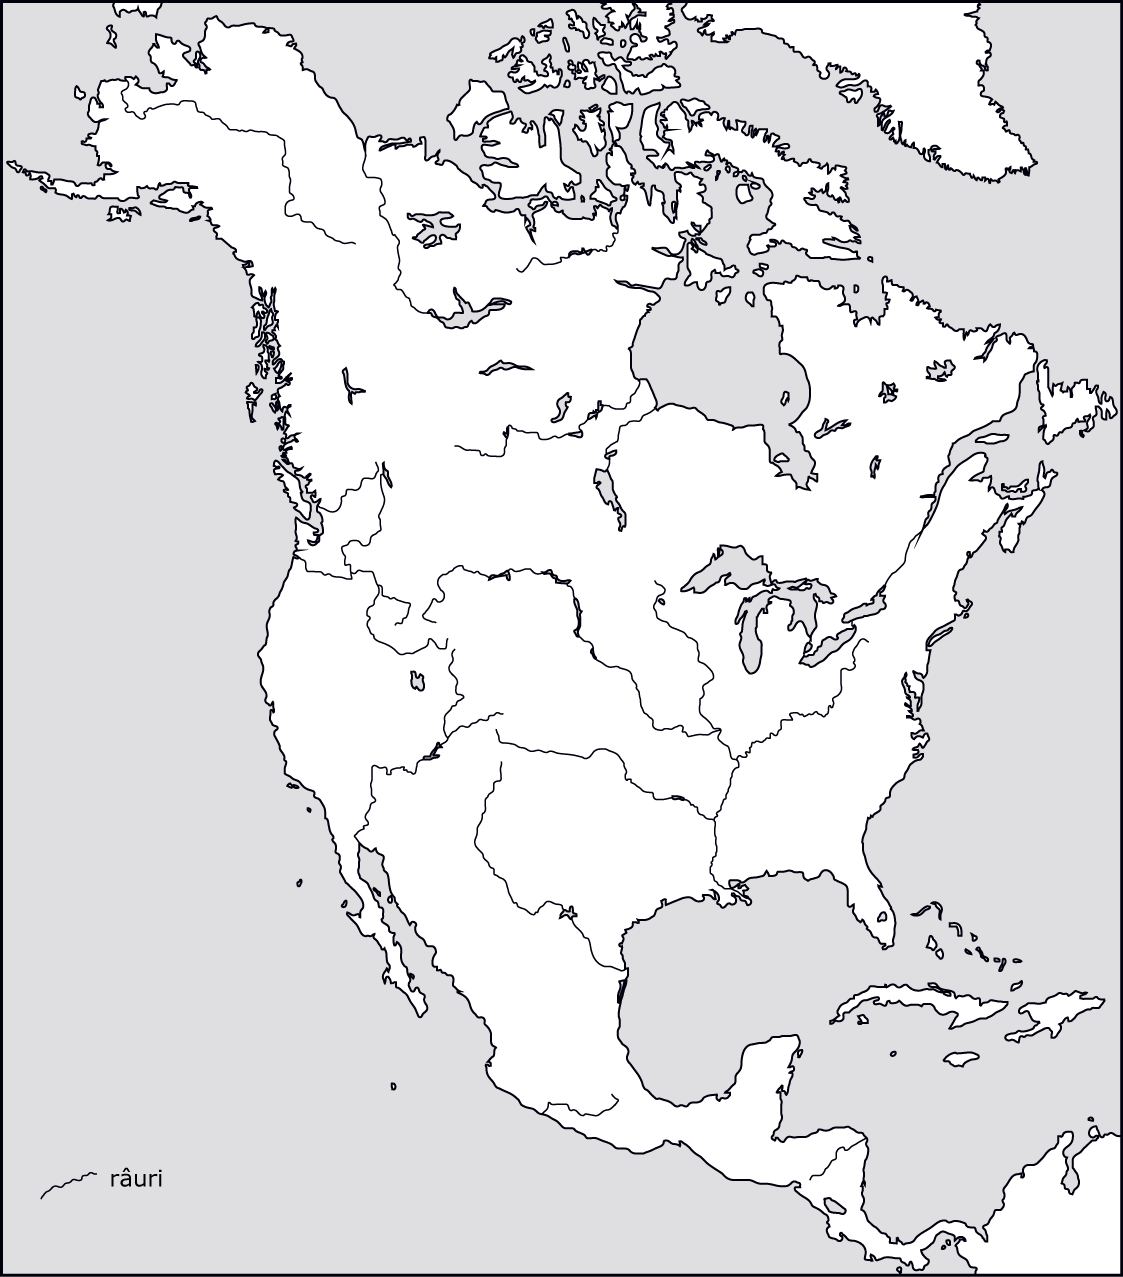 Контурная карта Северной Америки. Севрнаяамерика контурнаякарта. Контурная политическая карта Северной Америки для печати. Северная Америка физическая карта контур.